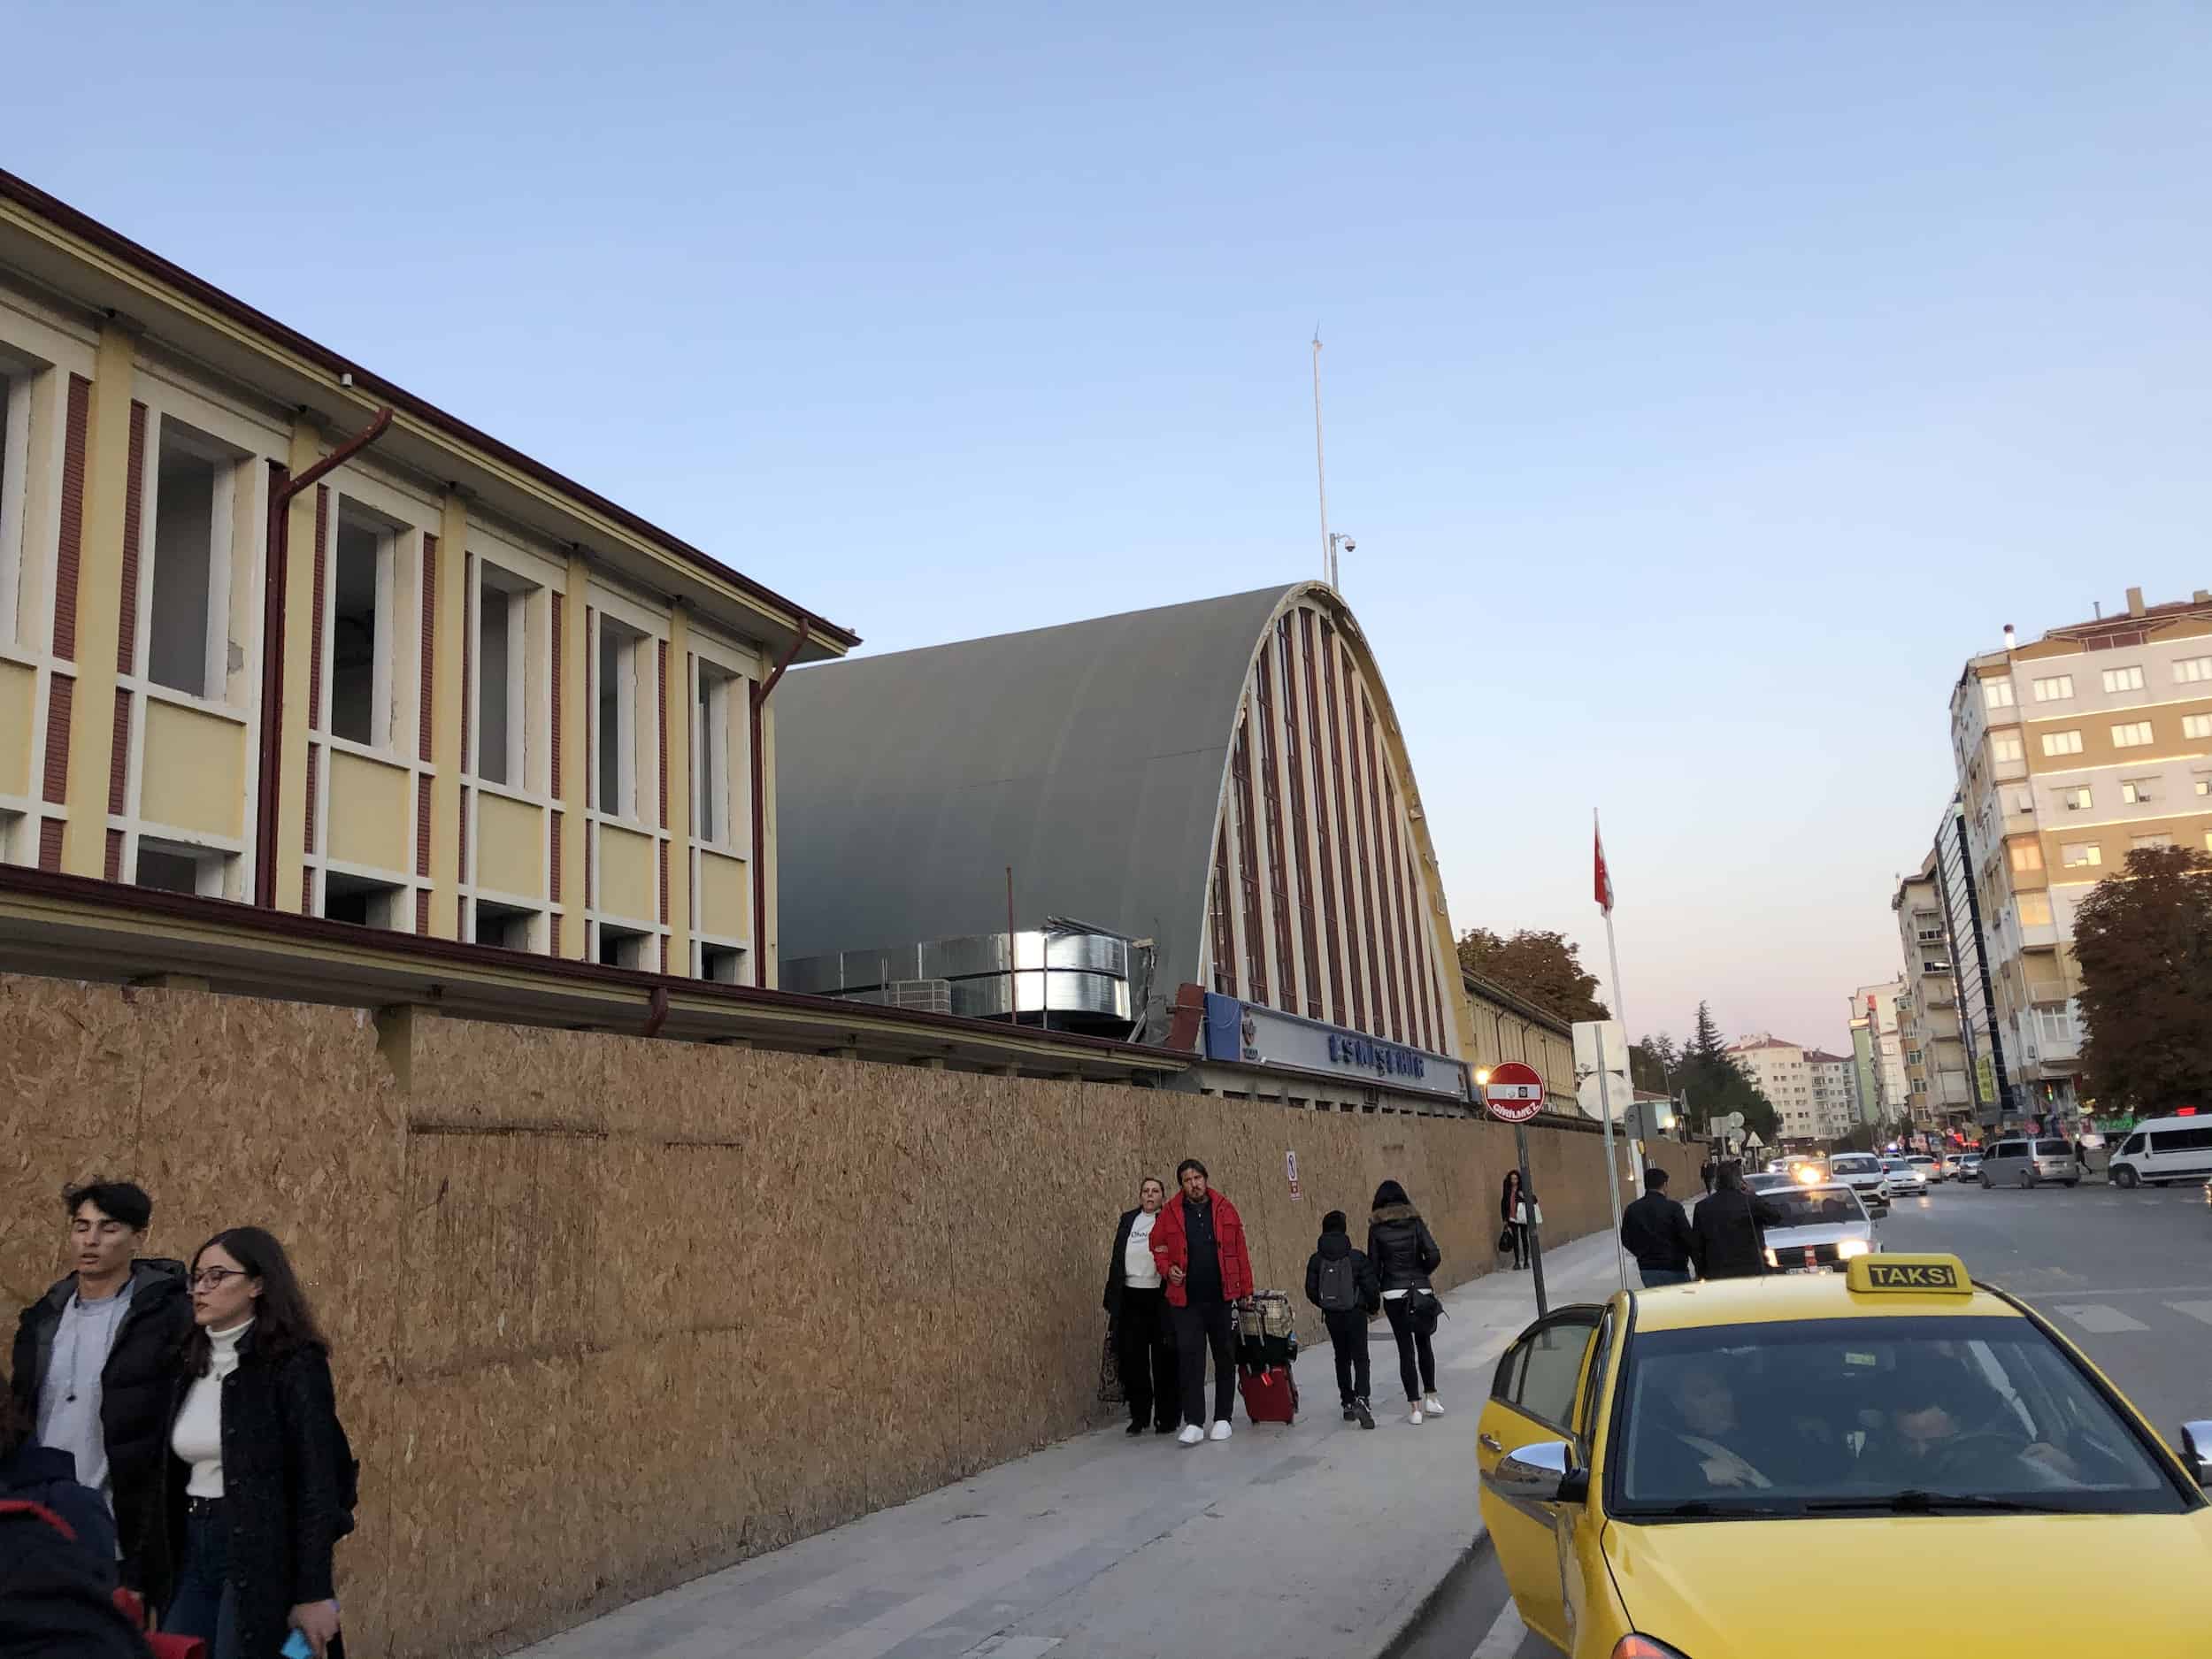 Eskişehir Railway Station